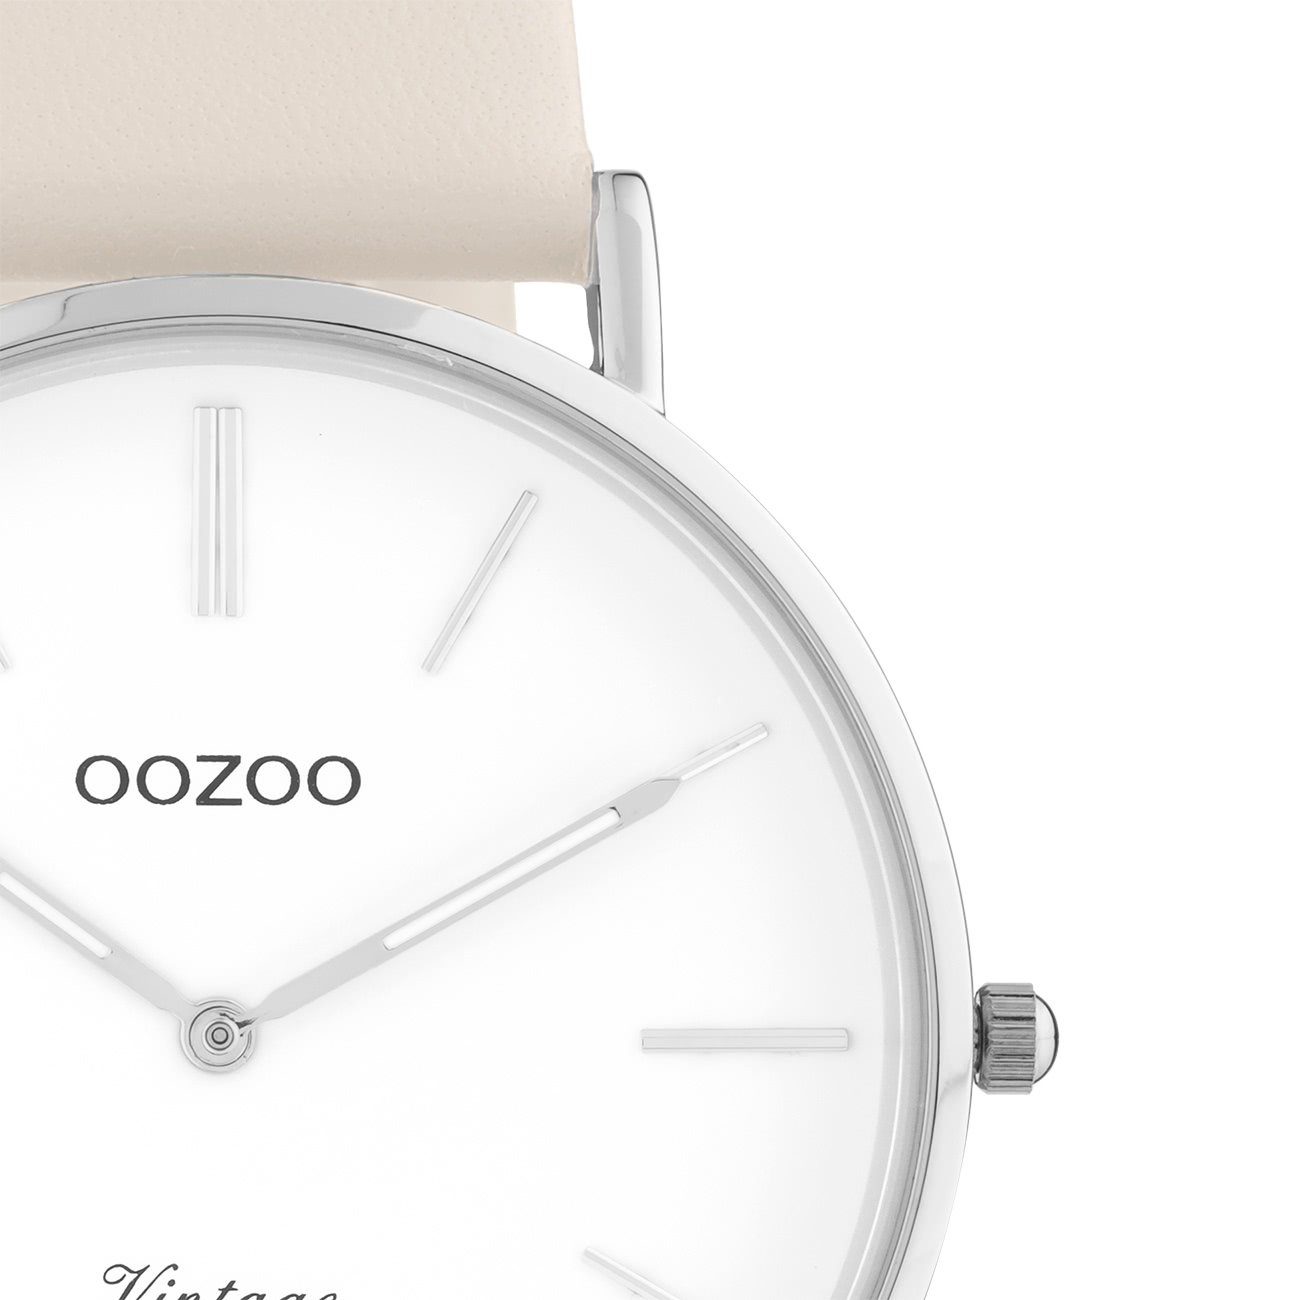 Armbanduhr Vintage rund, Damenuhr Quarzuhr Damen Oozoo groß Lederarmband, (ca. Fashion-Style 40mm) Series, OOZOO